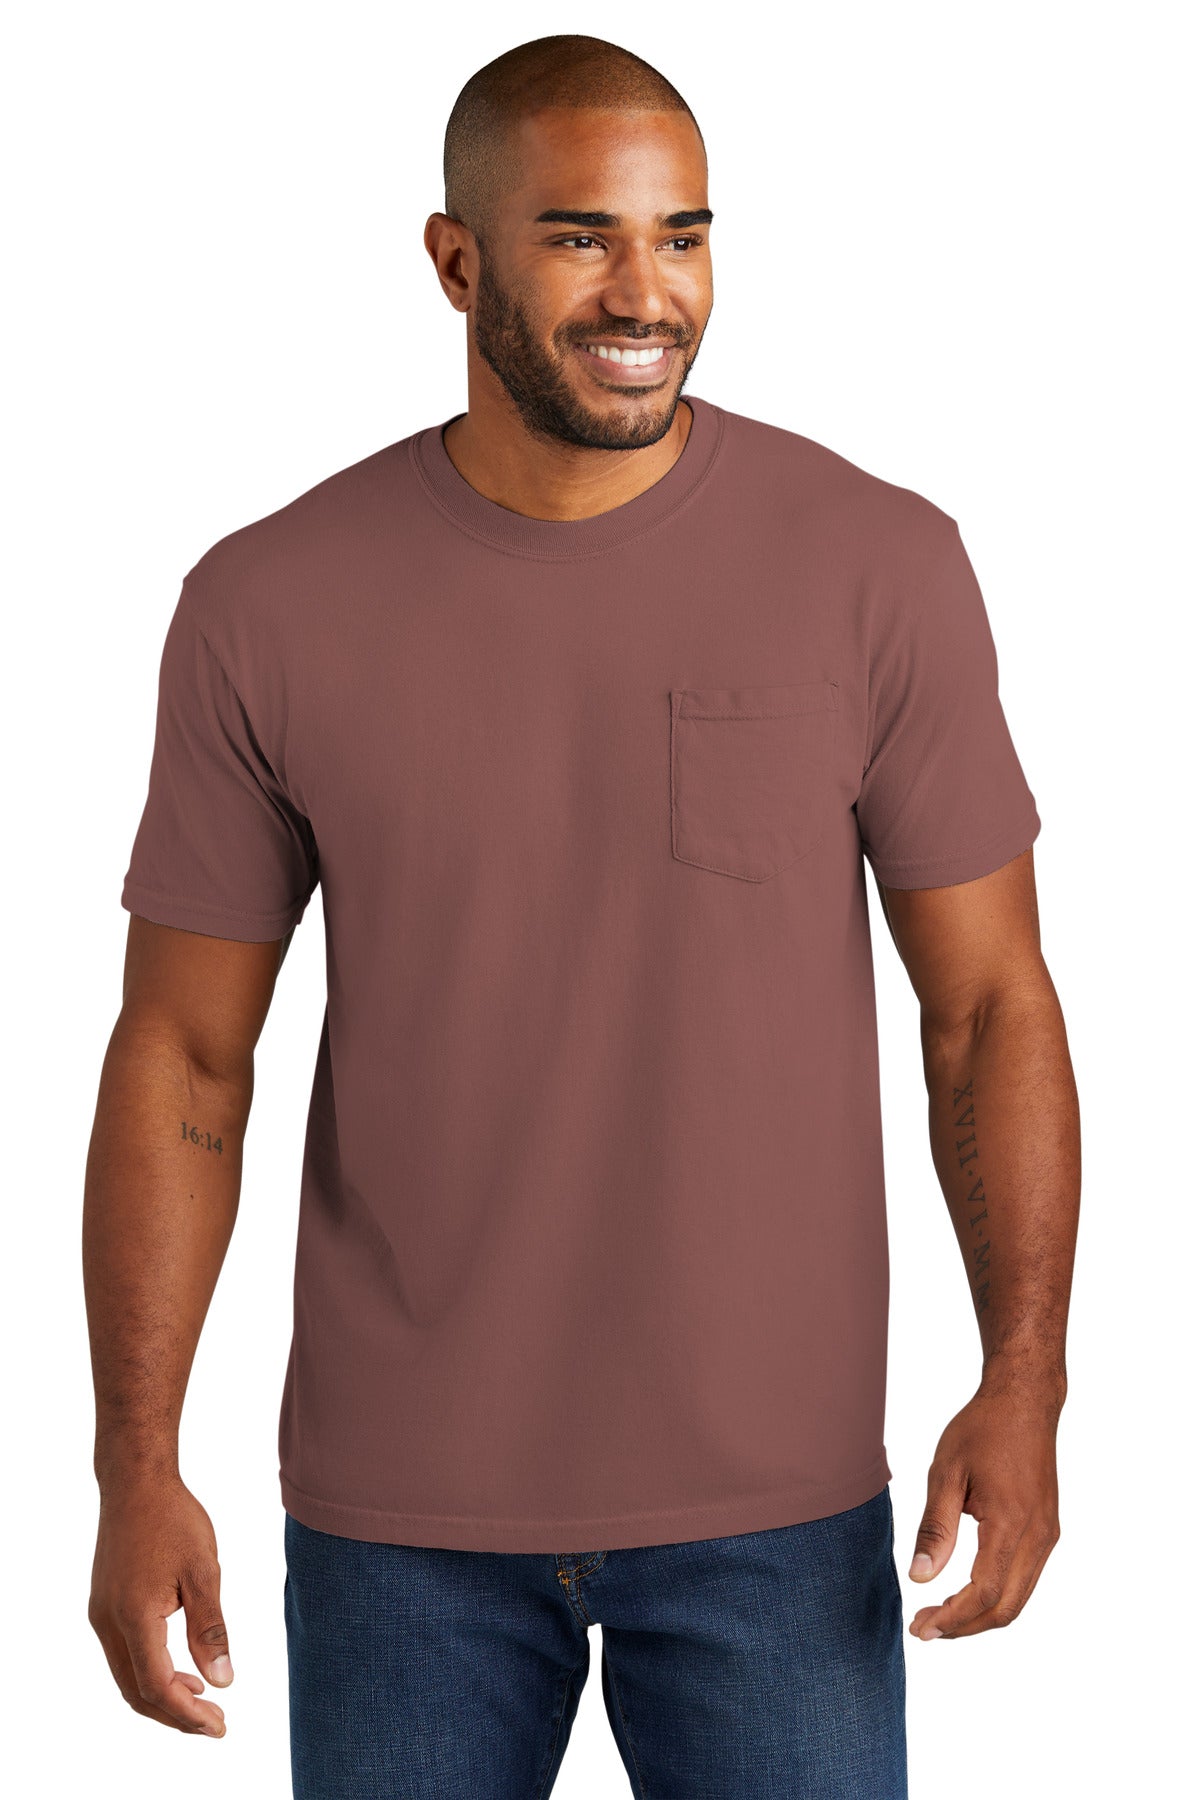 Classic Unisex T Shirt Comfort Colors 1717 - Print on demand